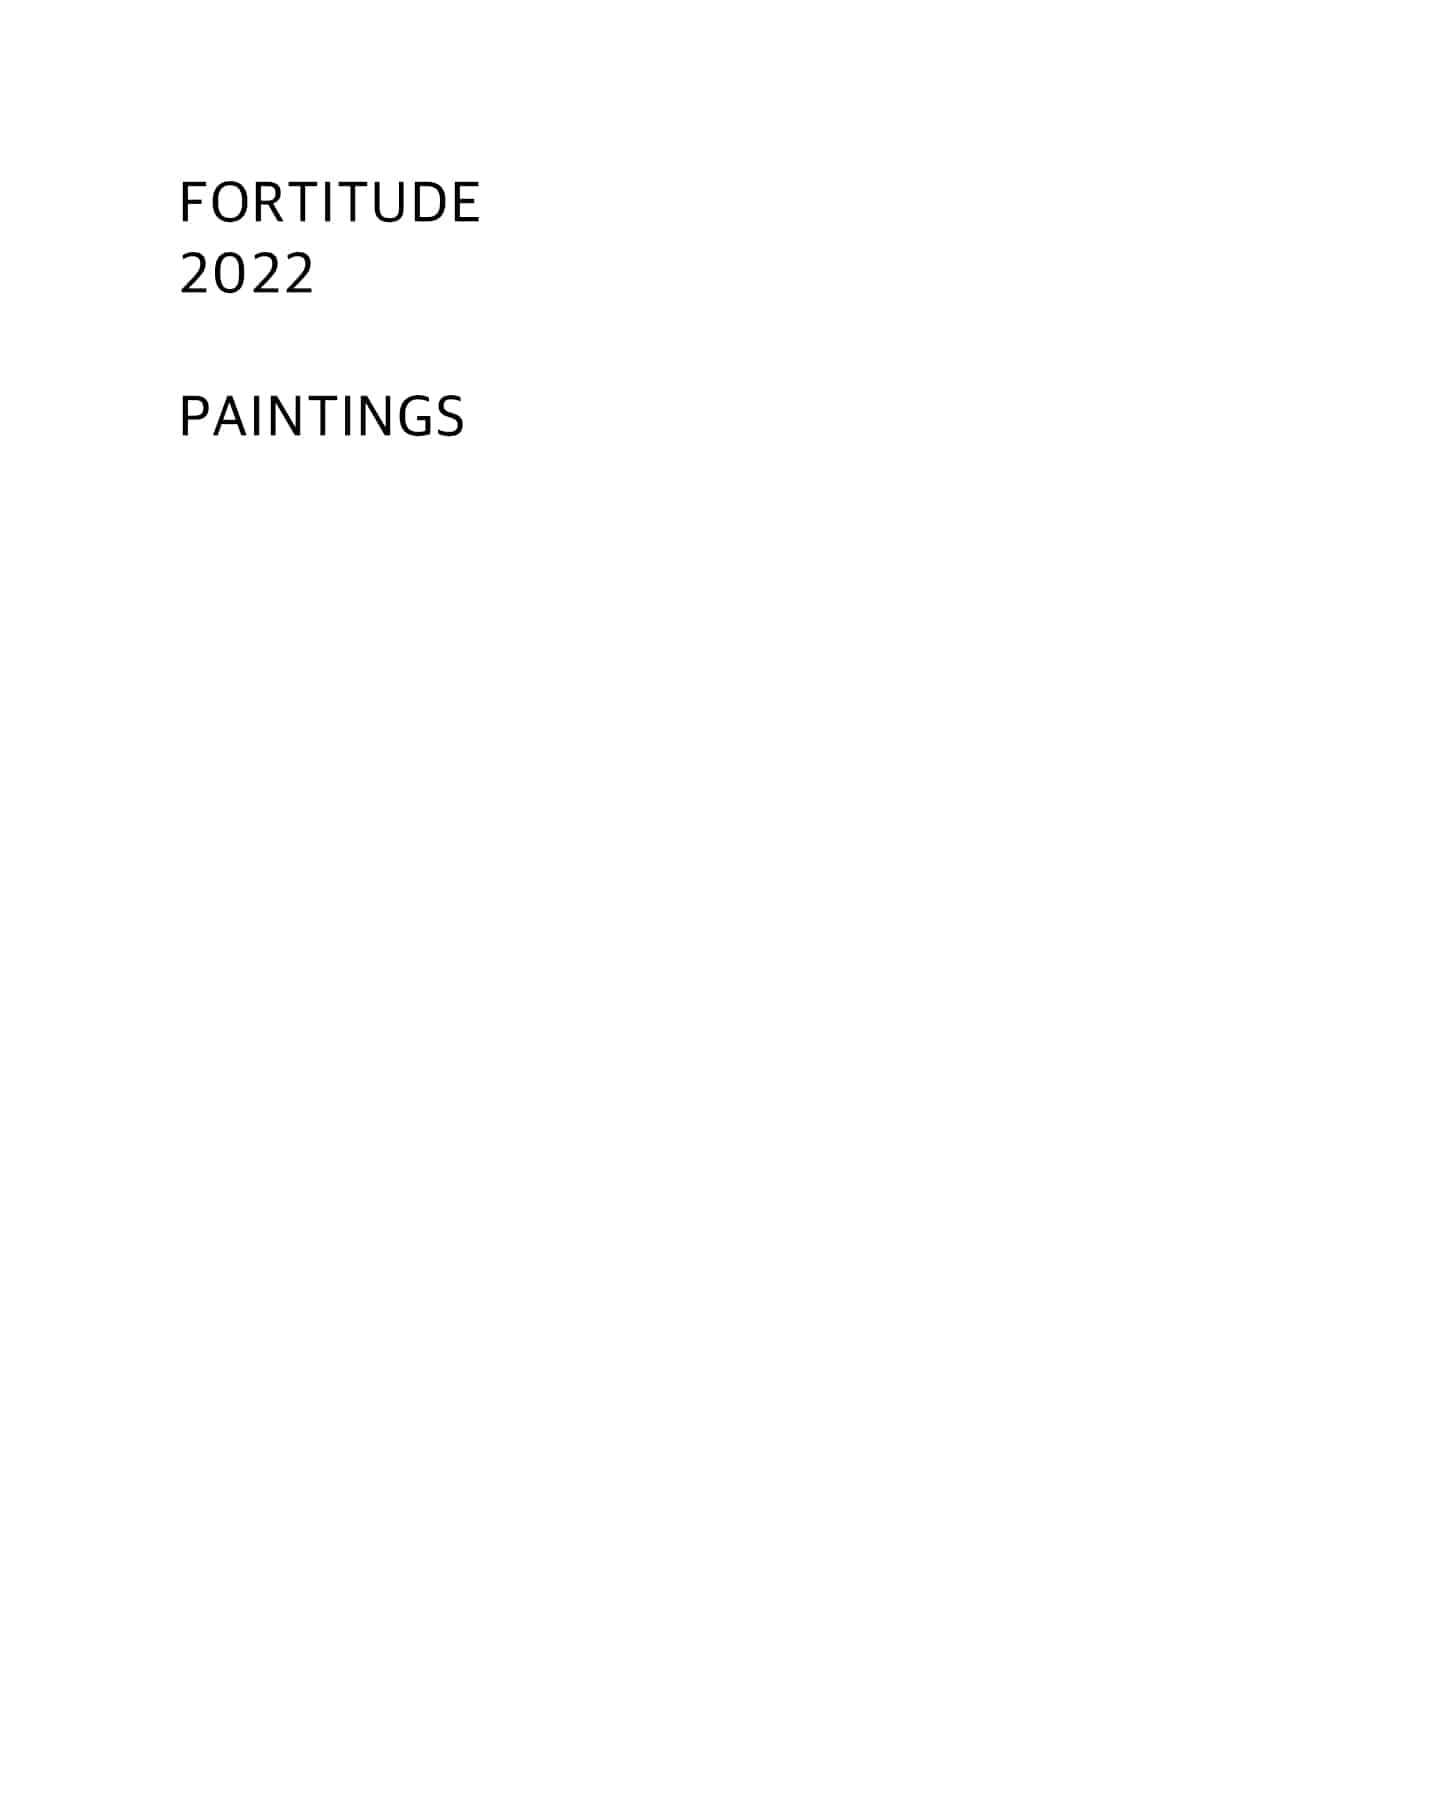 FORTITUDE 2022, paintings